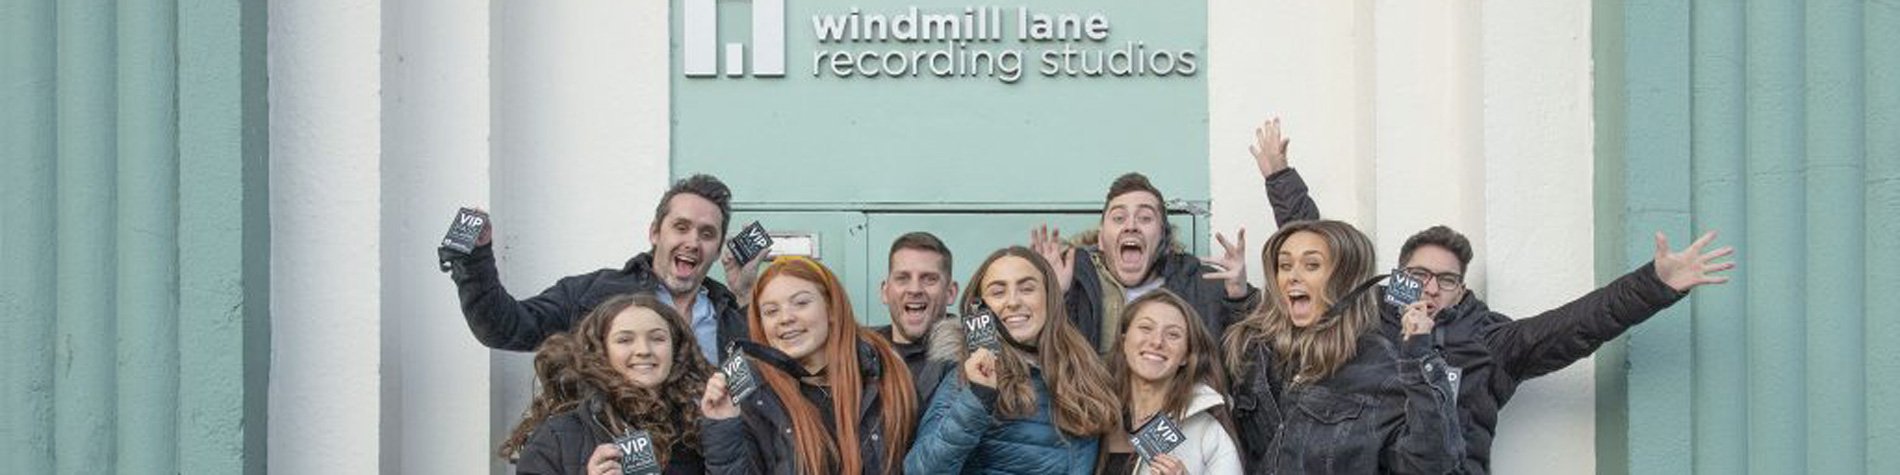 Group of Students Outside Windmill Lane Recording Studios Main Entrance